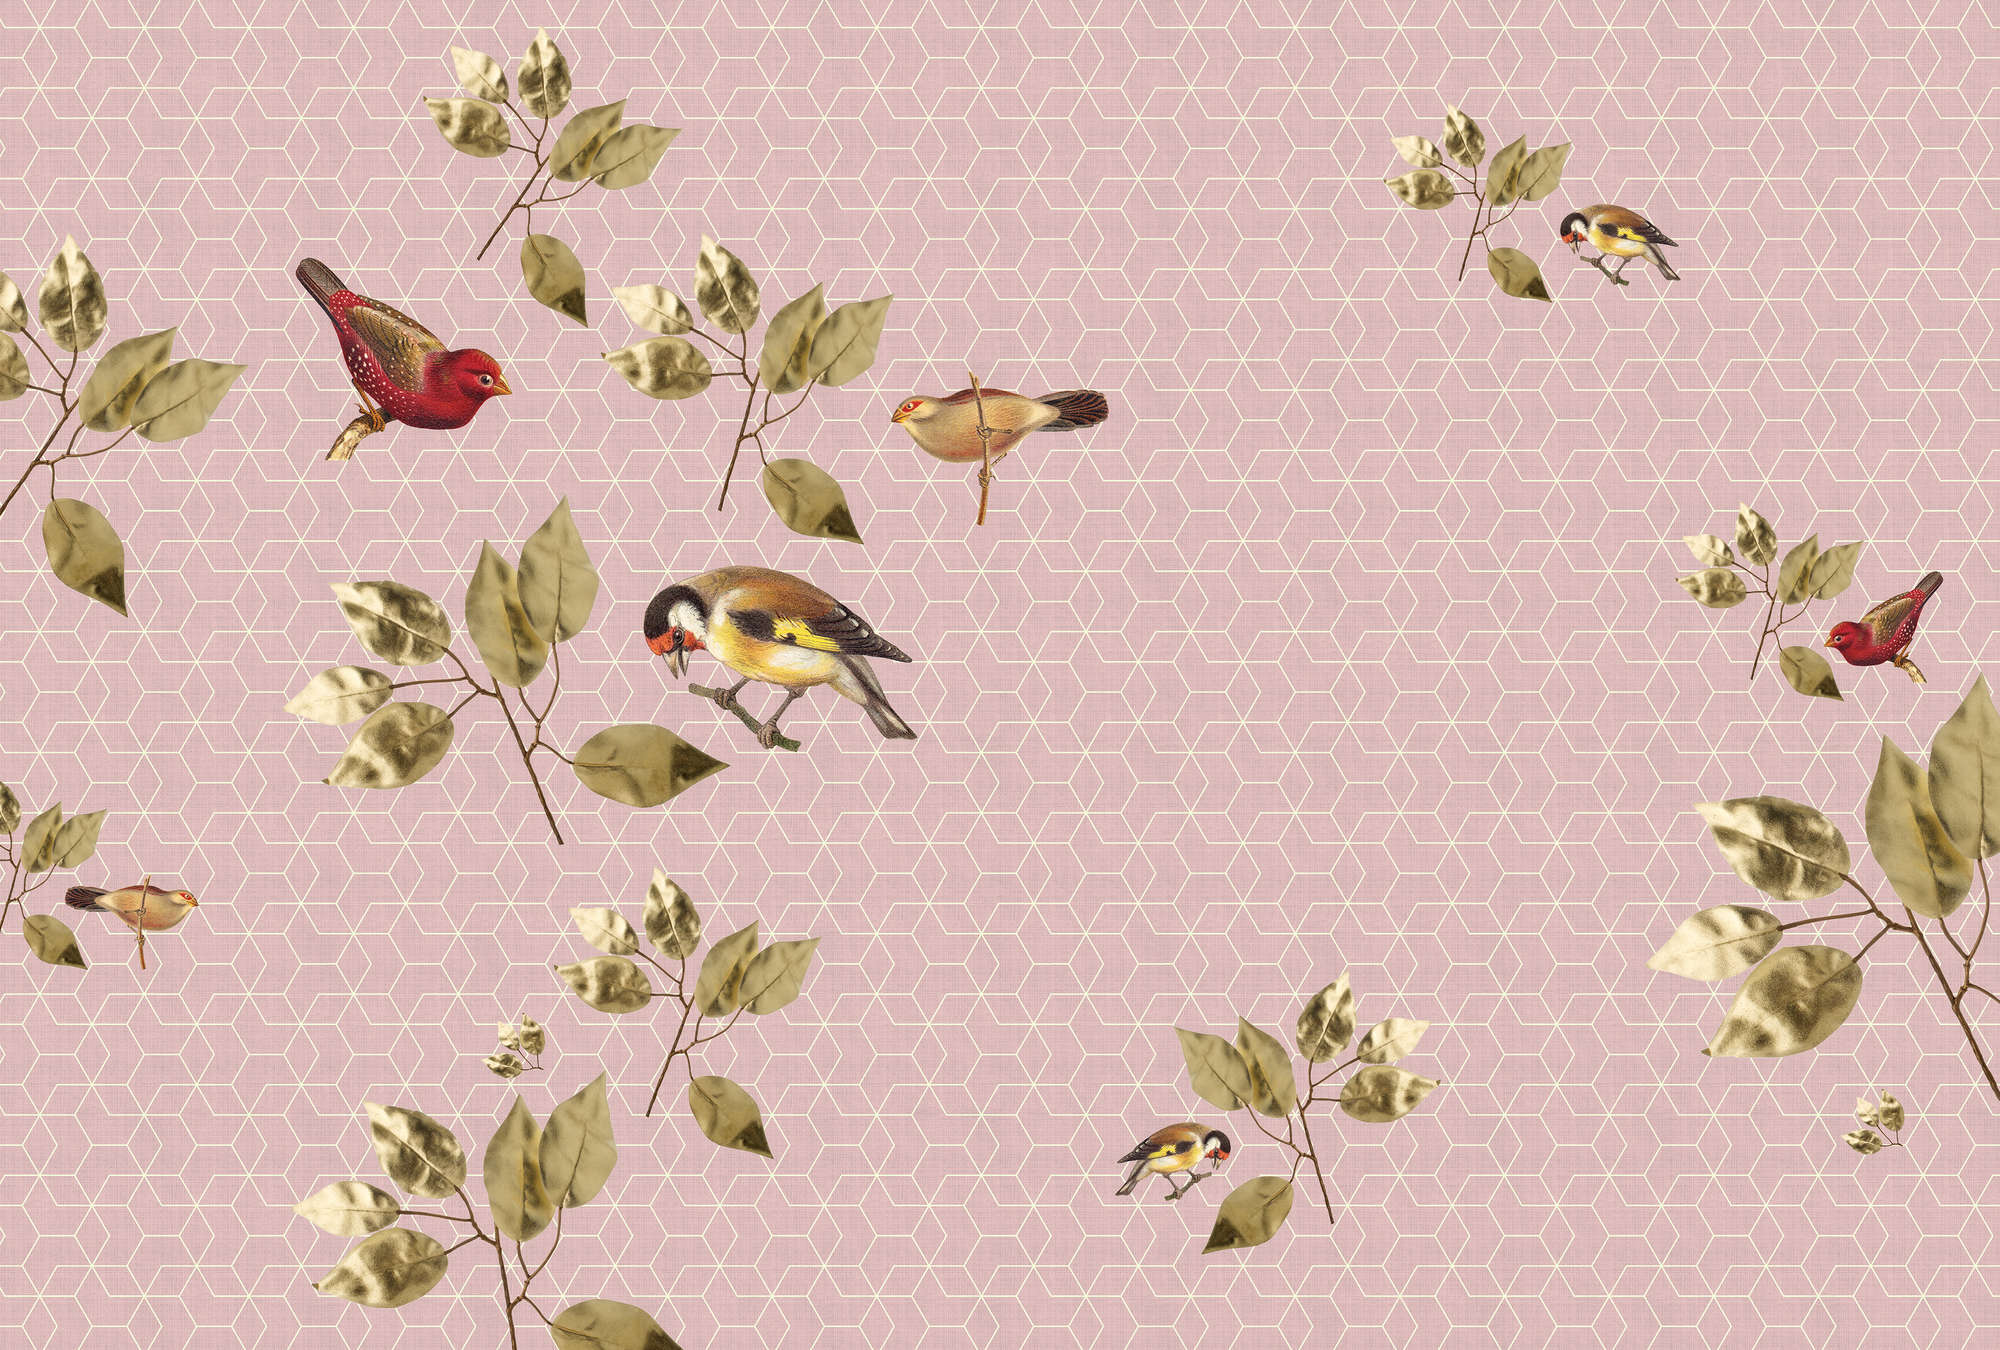             Brillant Birds 1 - Geometrie Fototapete mit Vogel & Blätter Muster – Grün, Rosa | Perlmutt Glattvlies
        